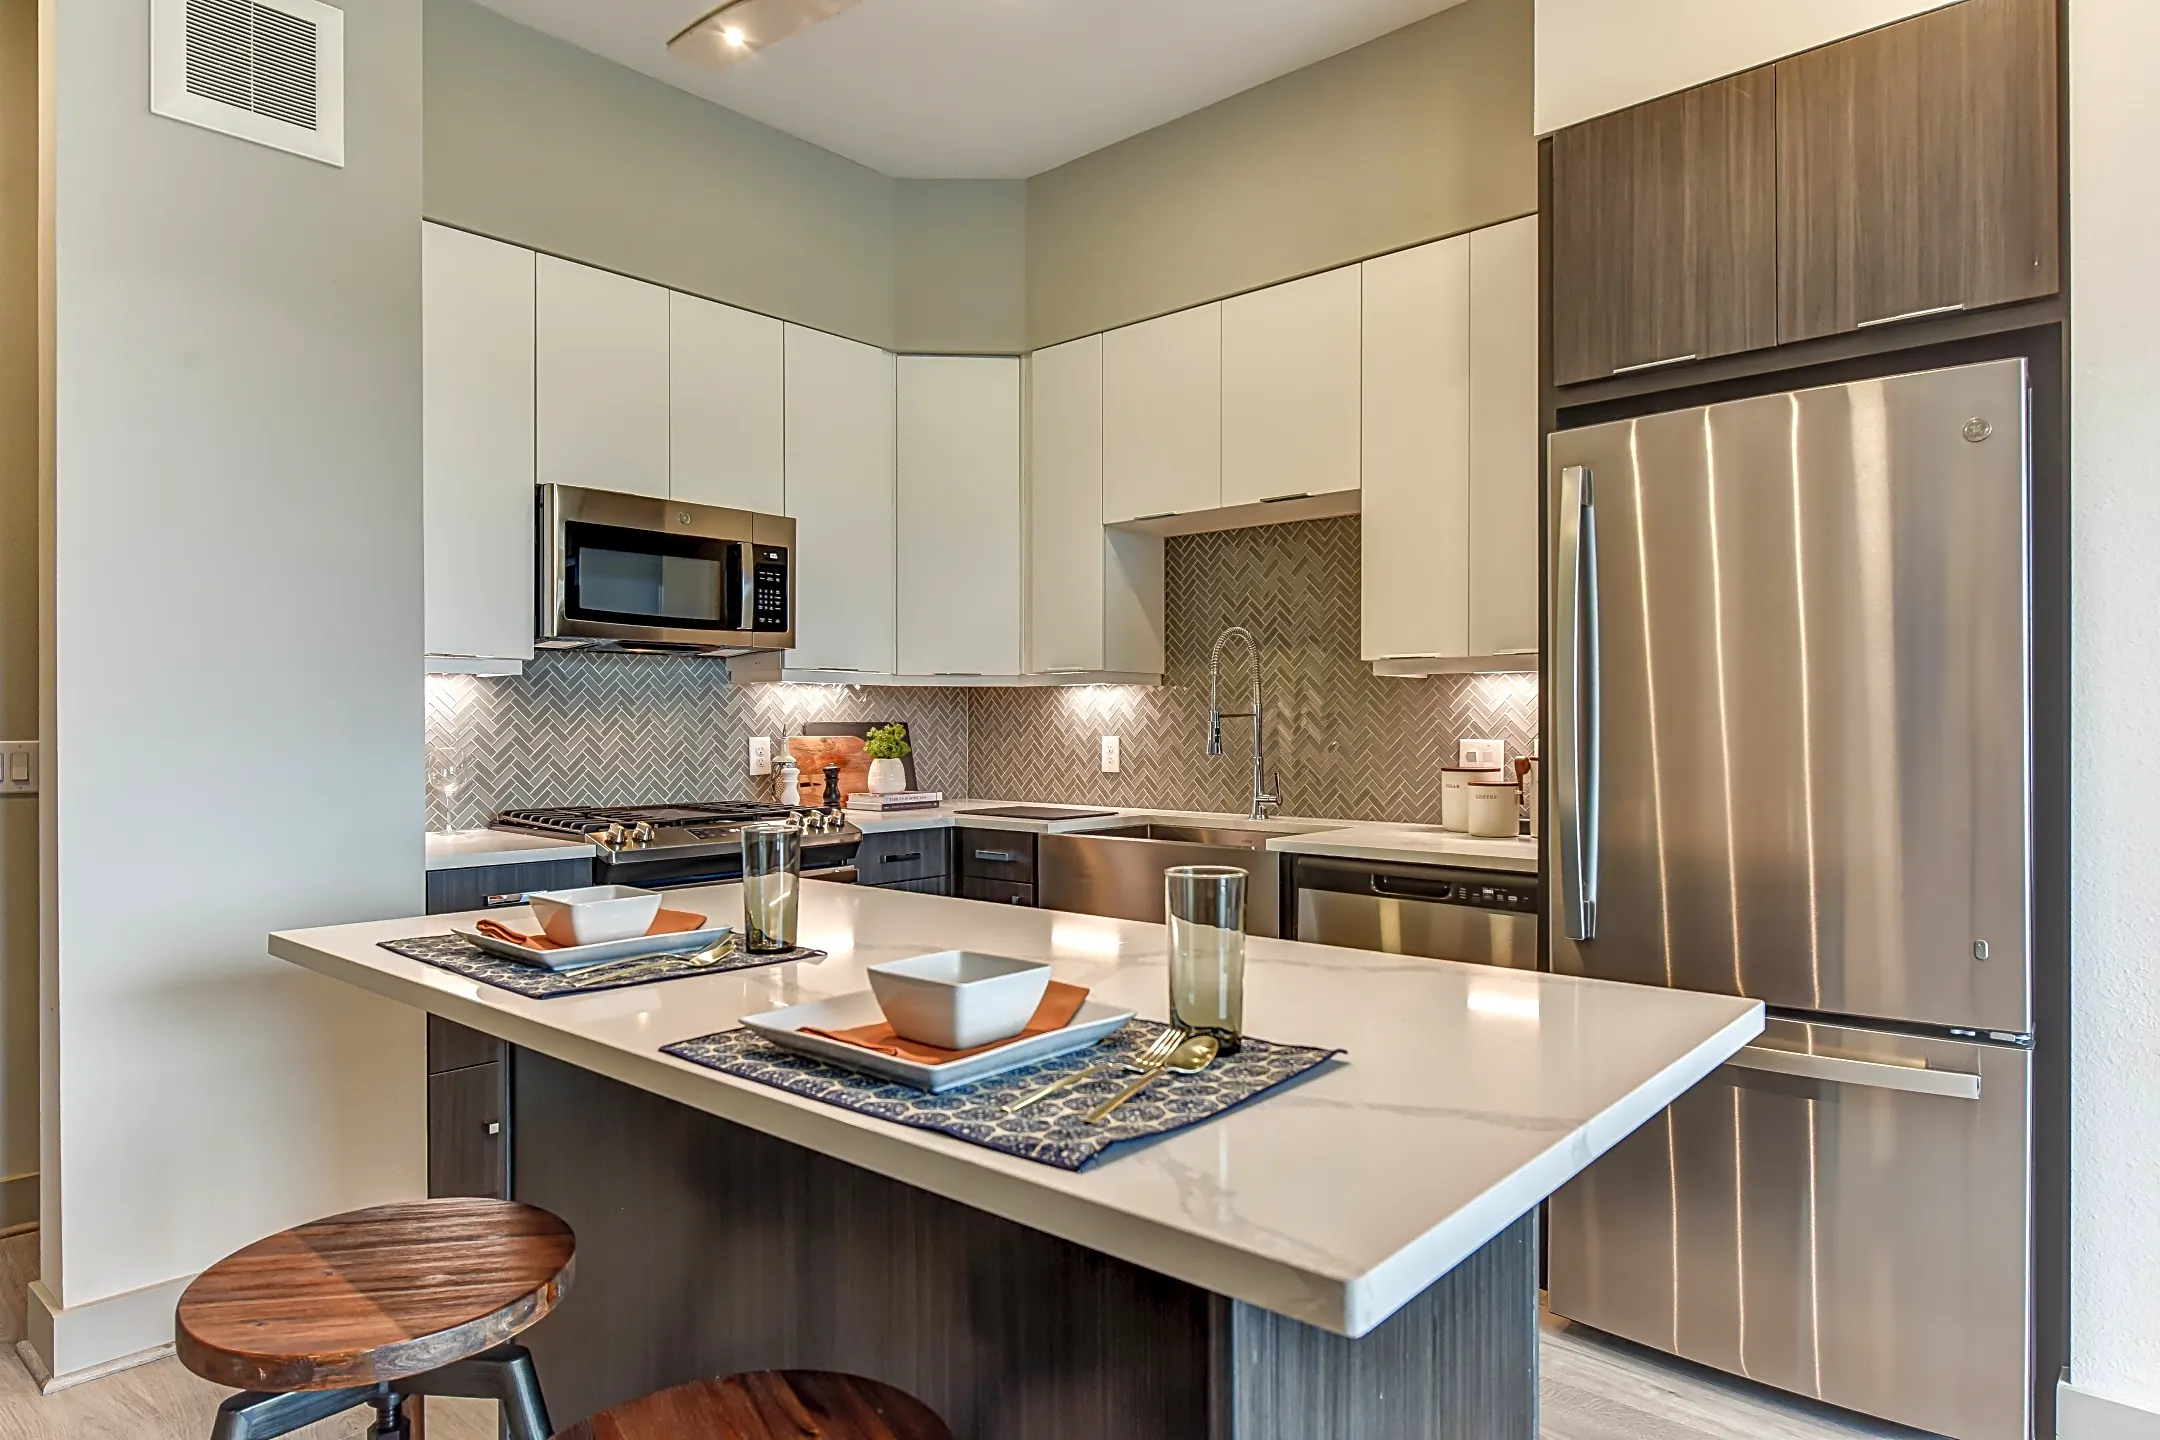 Kitchen - Domain Heights Apartments - Houston, TX